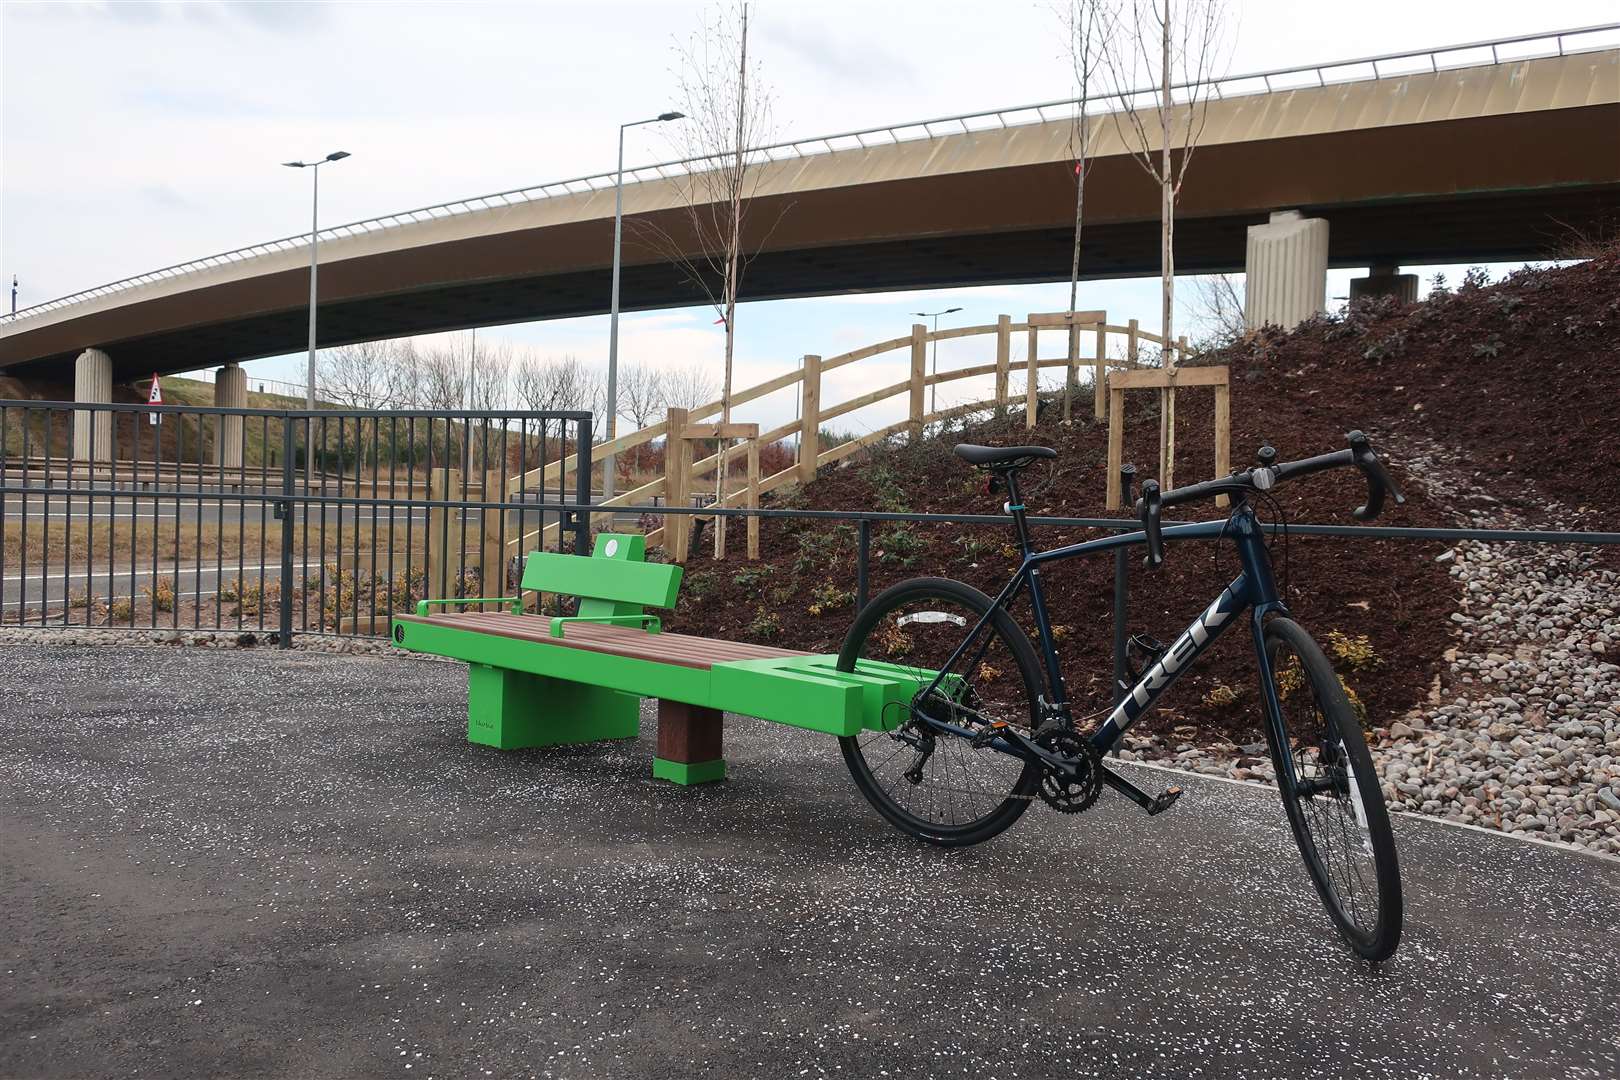 This bench below the Golden Bridge features a bike wheel rest.